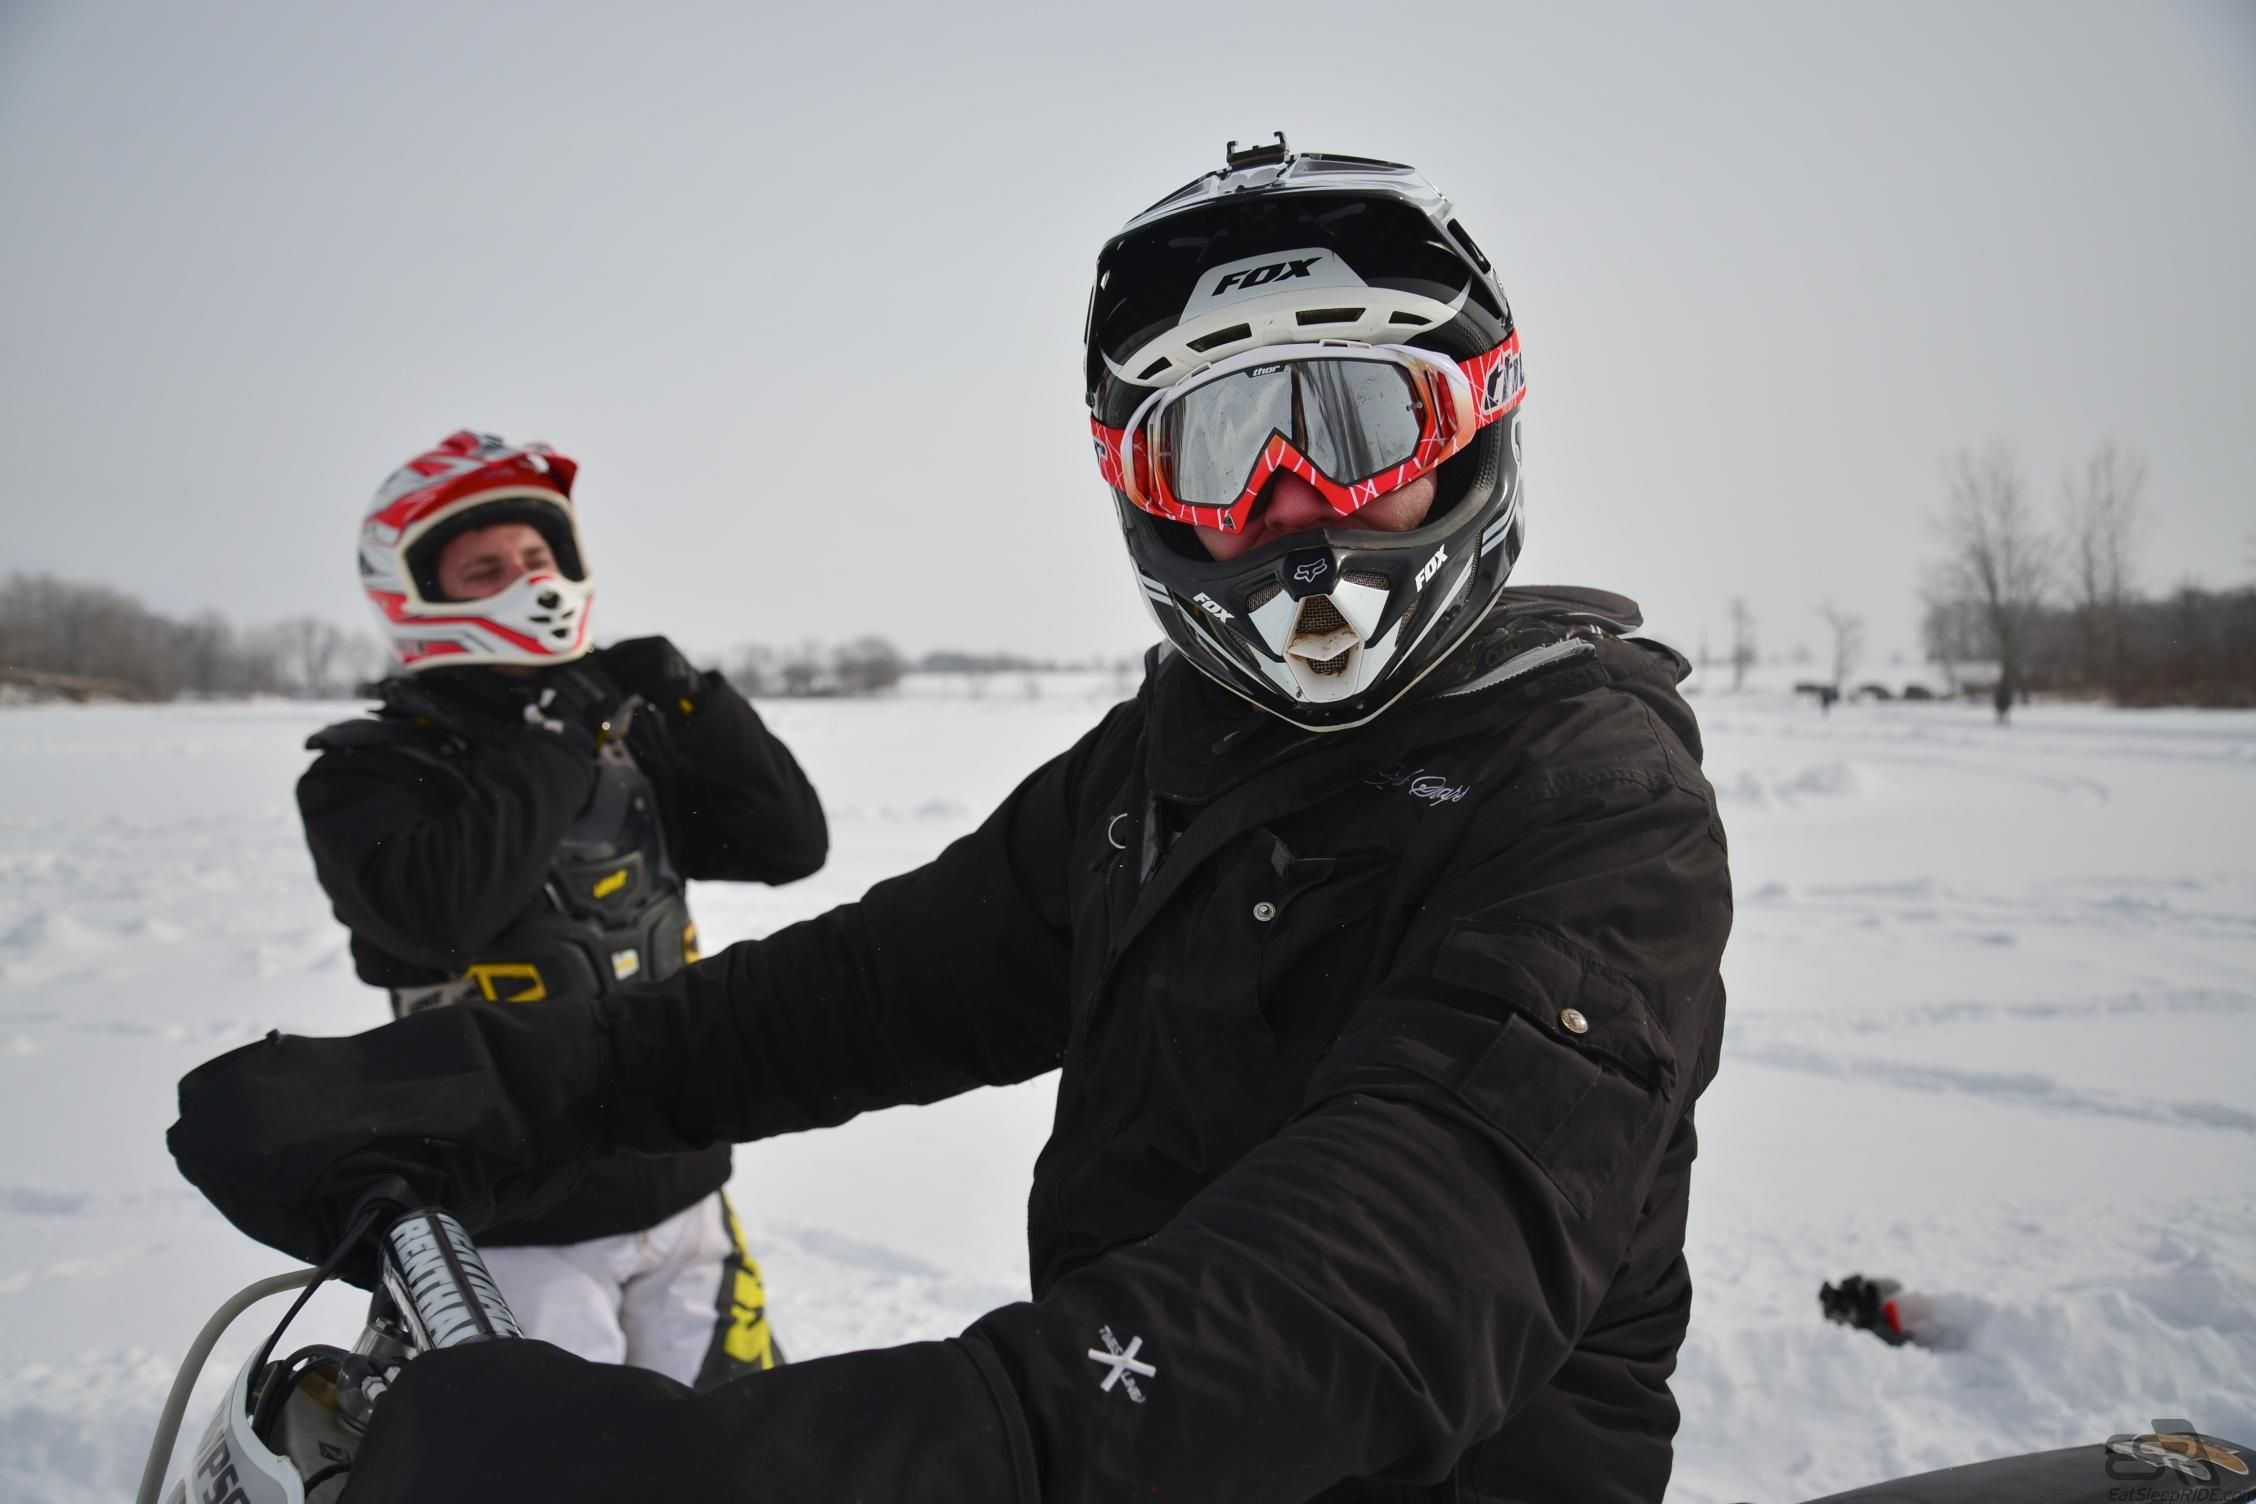 #333 Brent - Ice riding